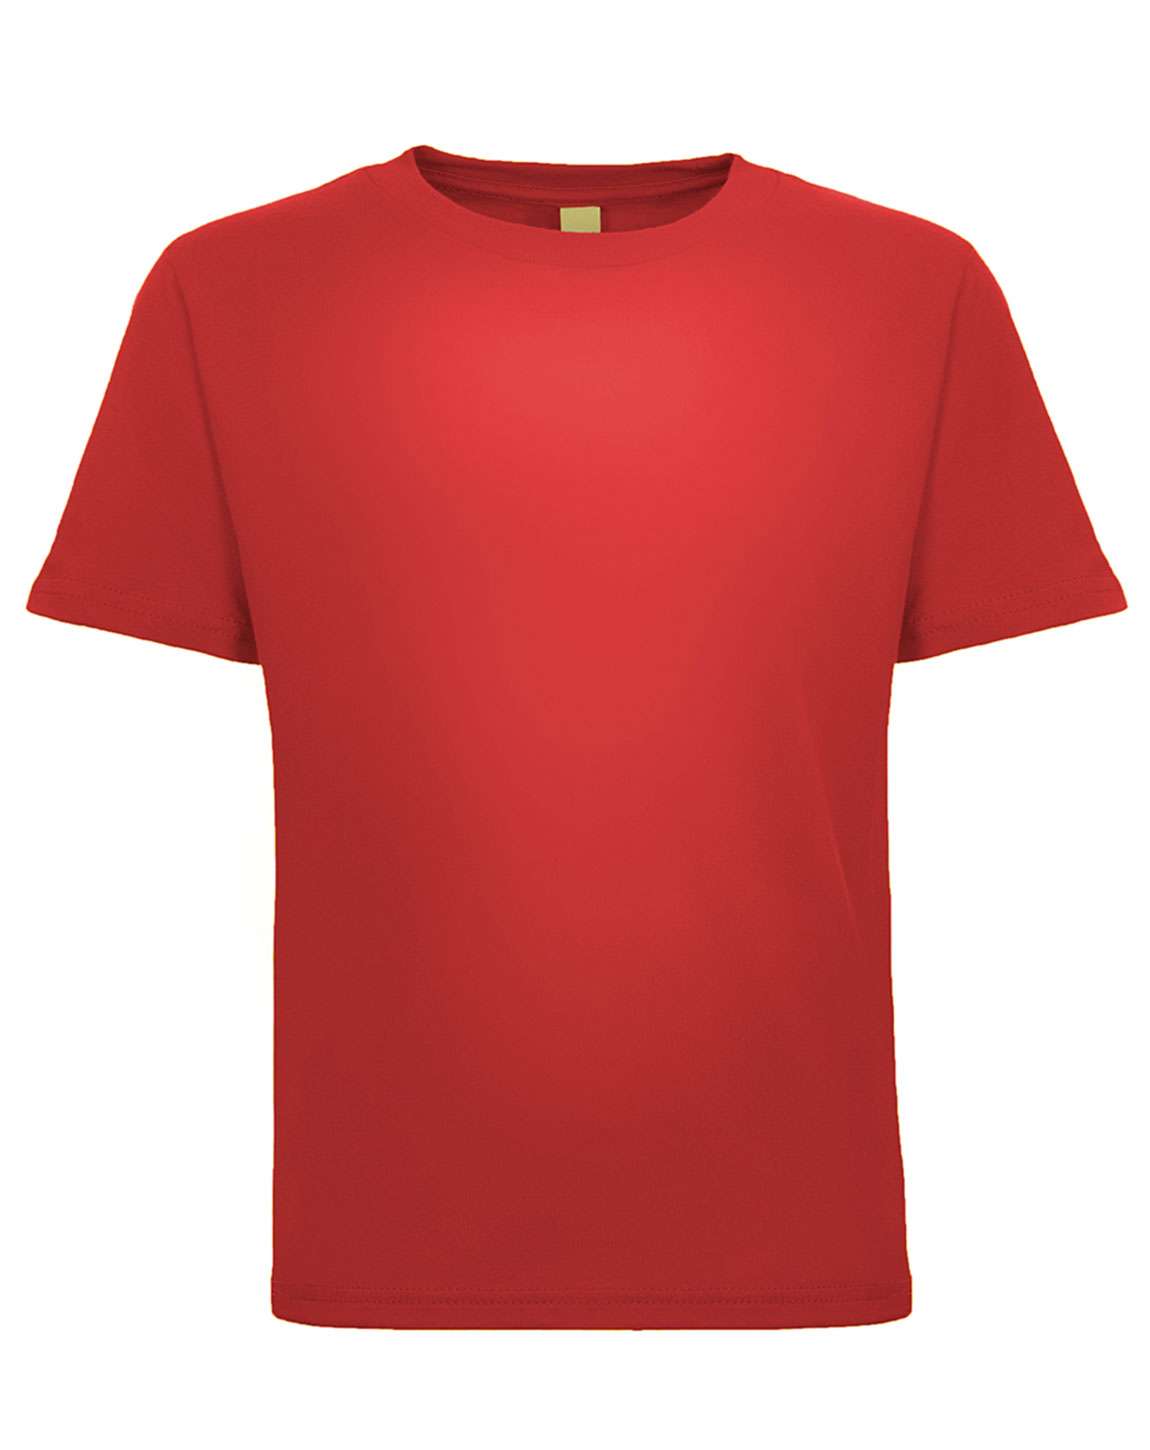 Toddler Sublimation T-Shirt-1310